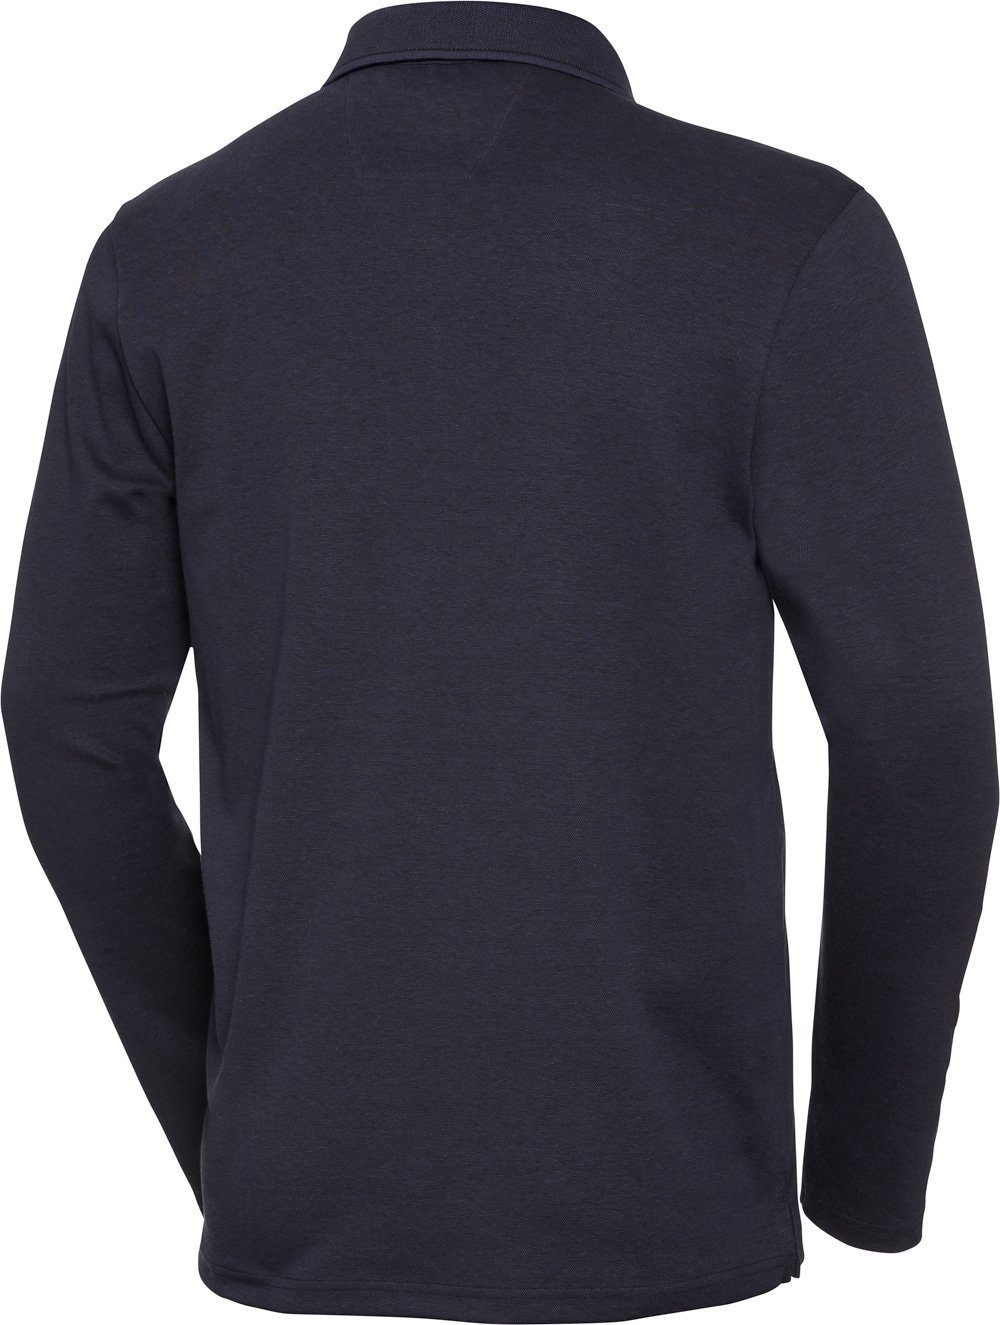 Franco Bettoni Langarm-Poloshirt kurze dunkelblau Seitenschlitze